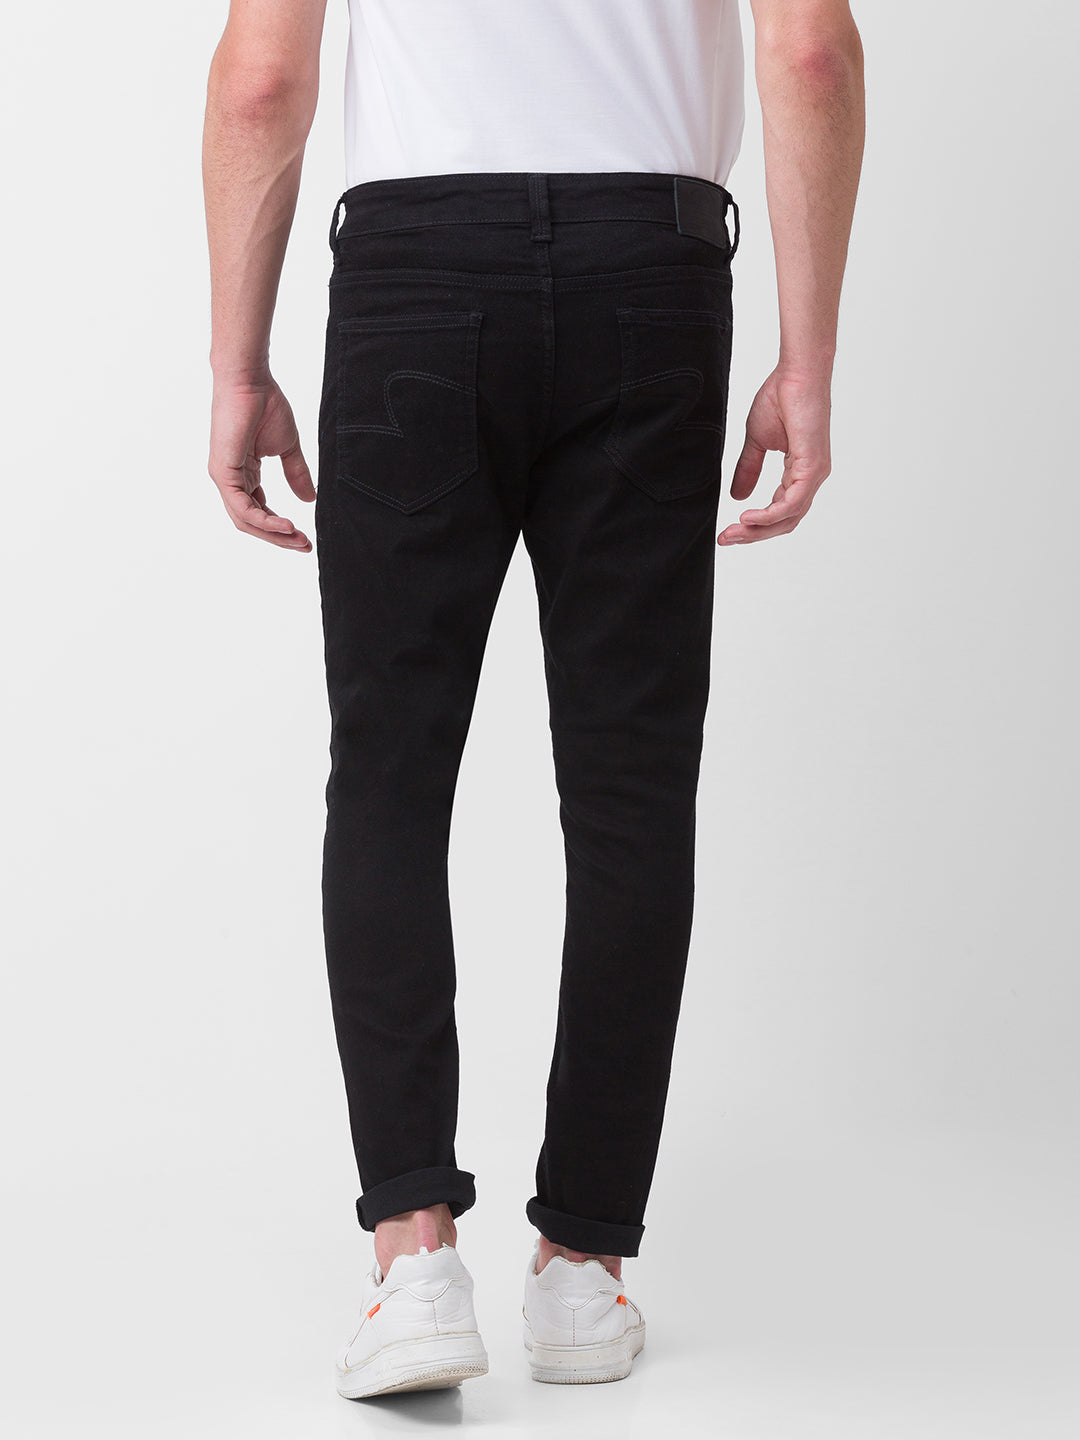 Spykar Black Cotton Slim Fit Tapered Length Jeans For Men (Kano)